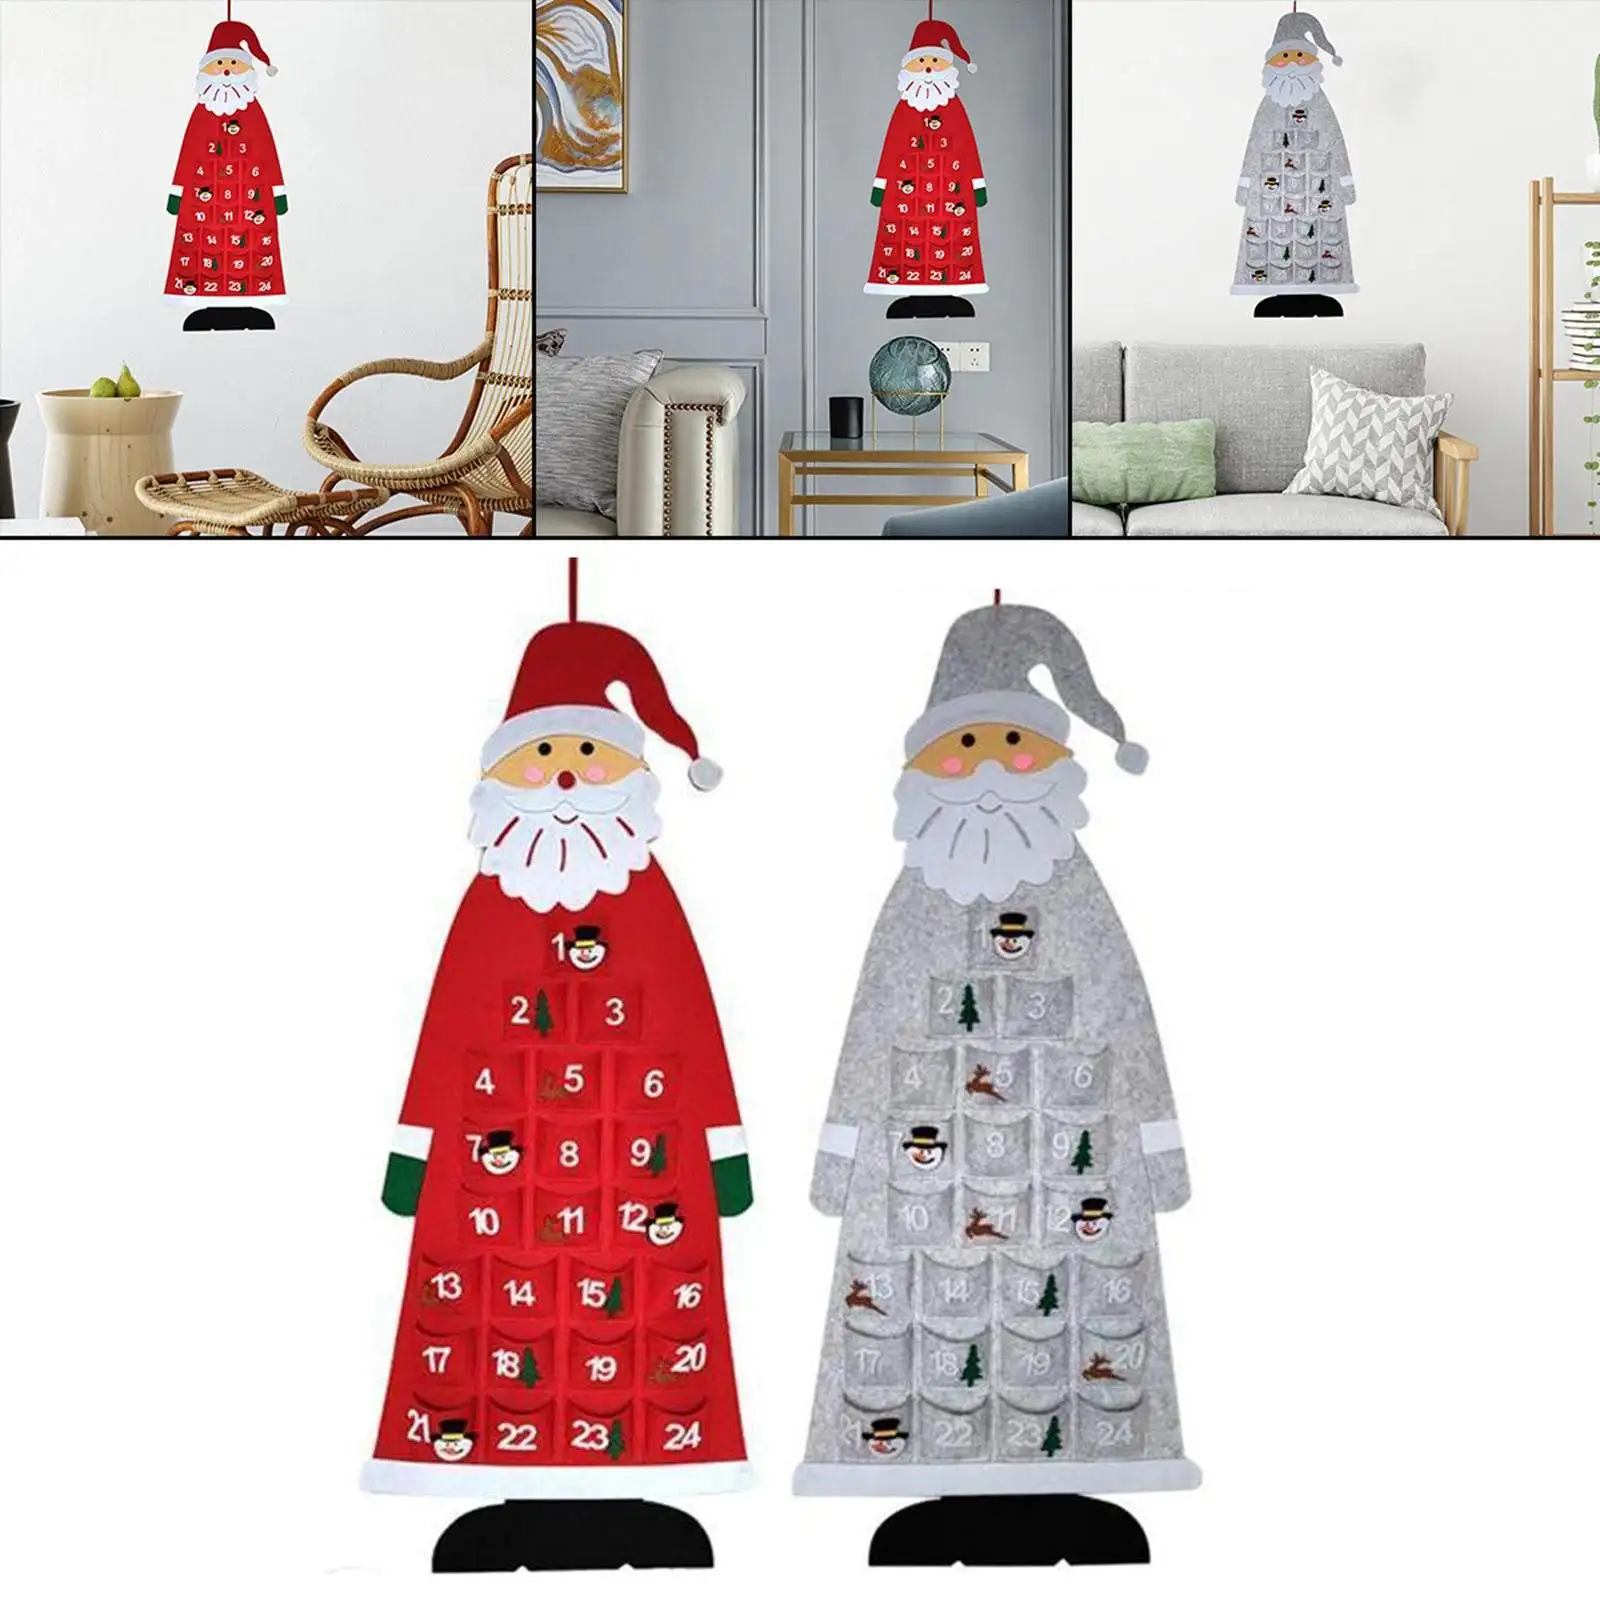 2x Christmas Advent Calendar Felt Wall Hanging With Pockets Santa Advent Calendar 24 Days Kids Toys Gift For Home Decor